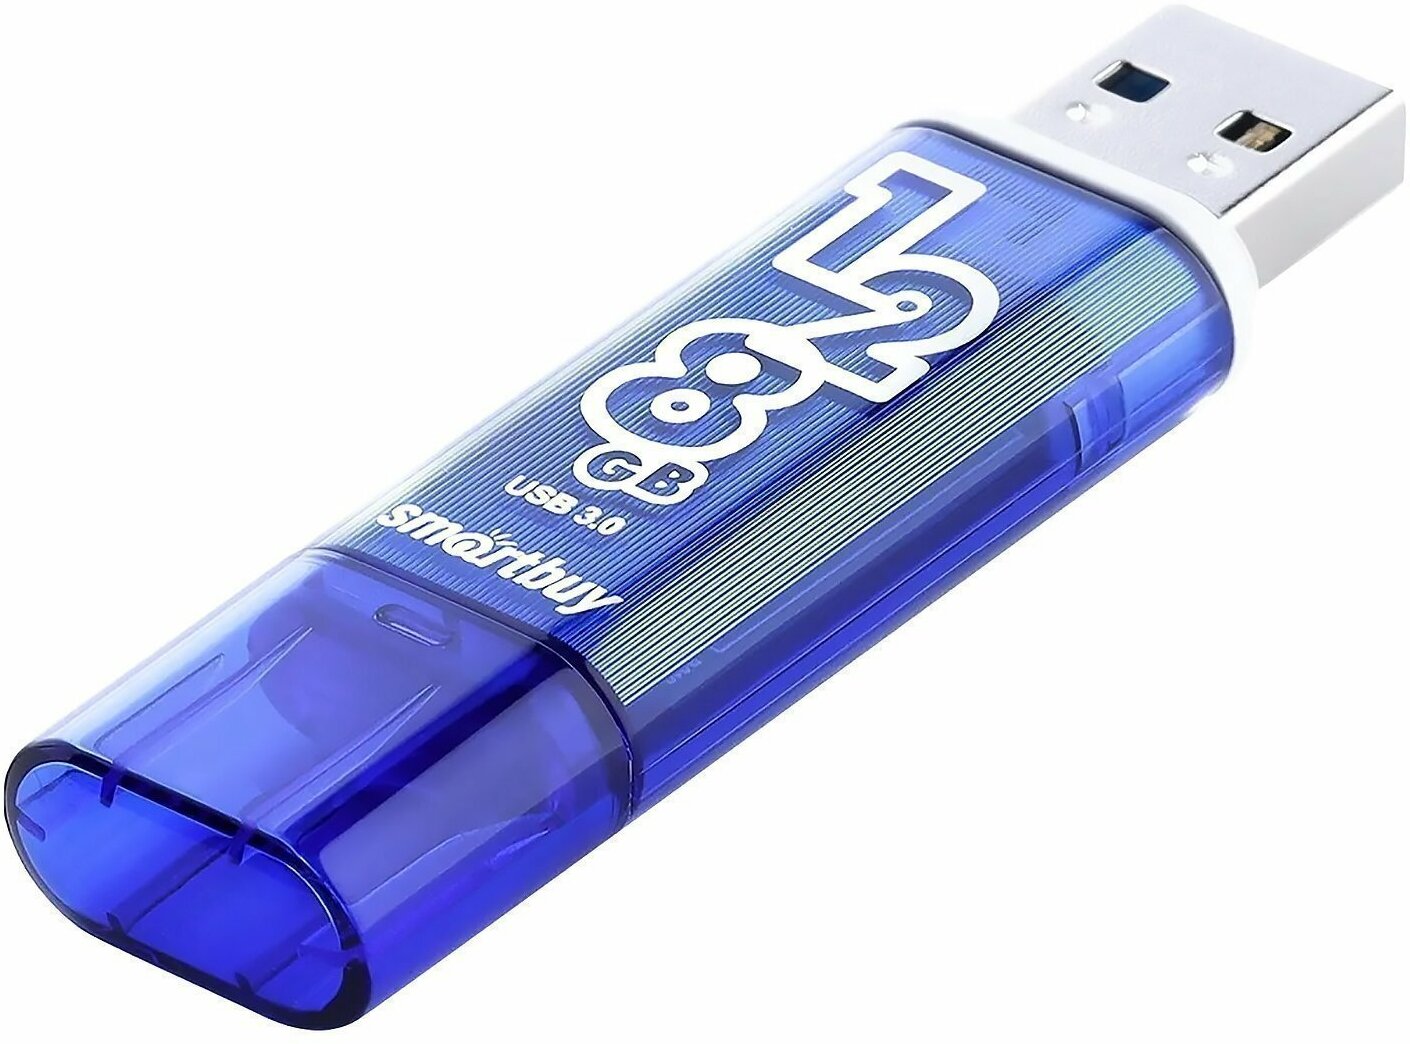 Флешка SmartBuy Glossy USB 30